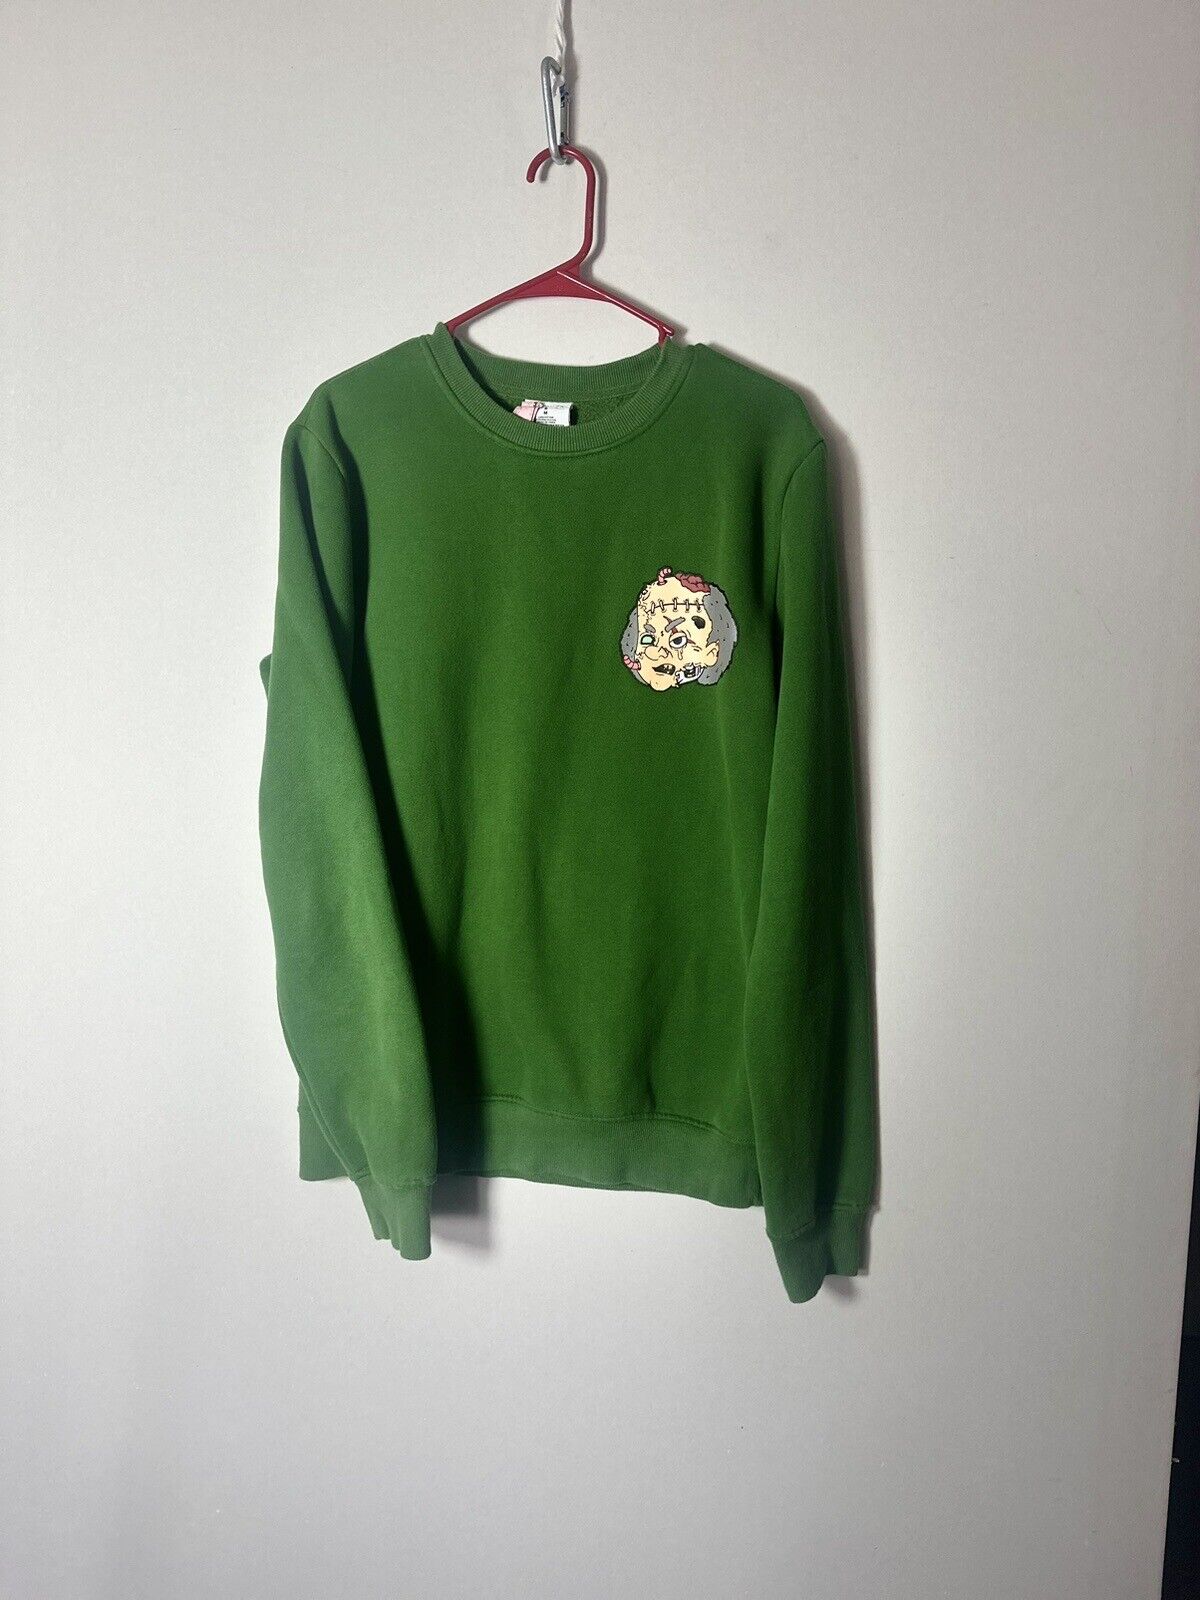 TULONES Green Sweatshirt Size M - image 3